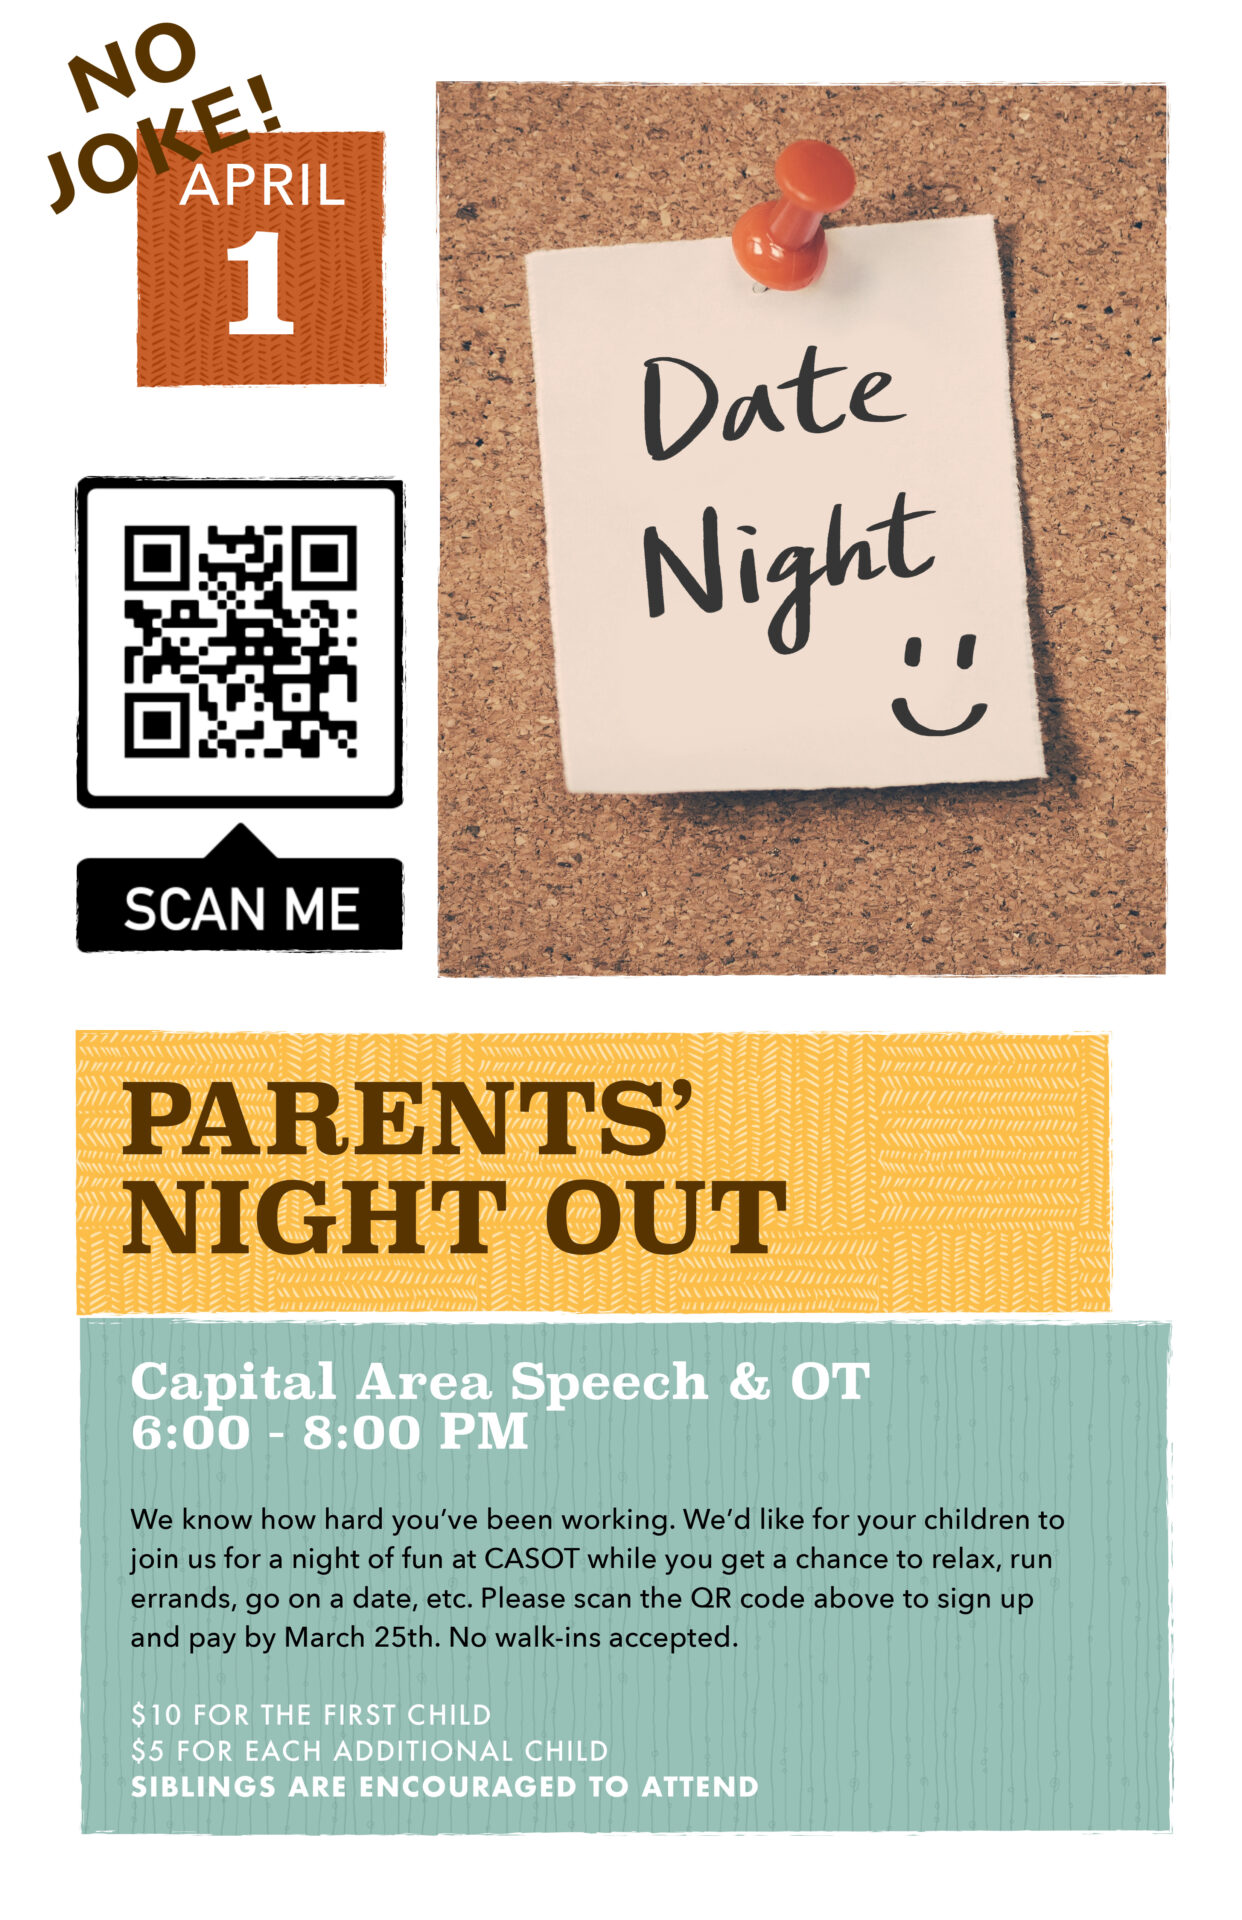 Parent's Night Out - Capital Area Speech & O.T.